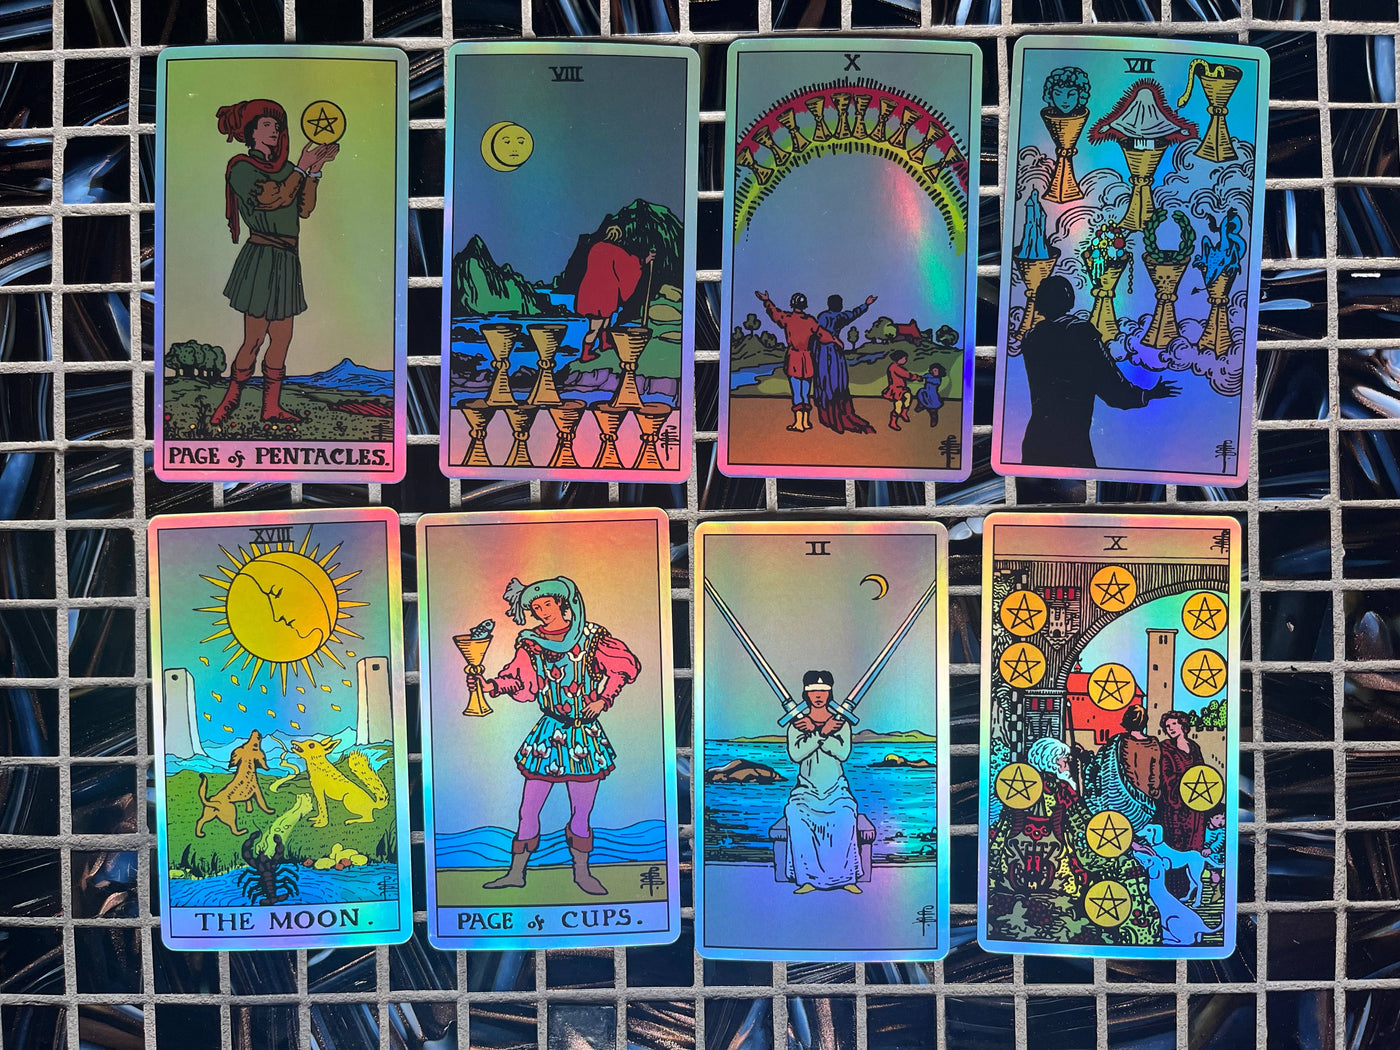 Holo Tarot | Holographic Tarot Deck & Guide